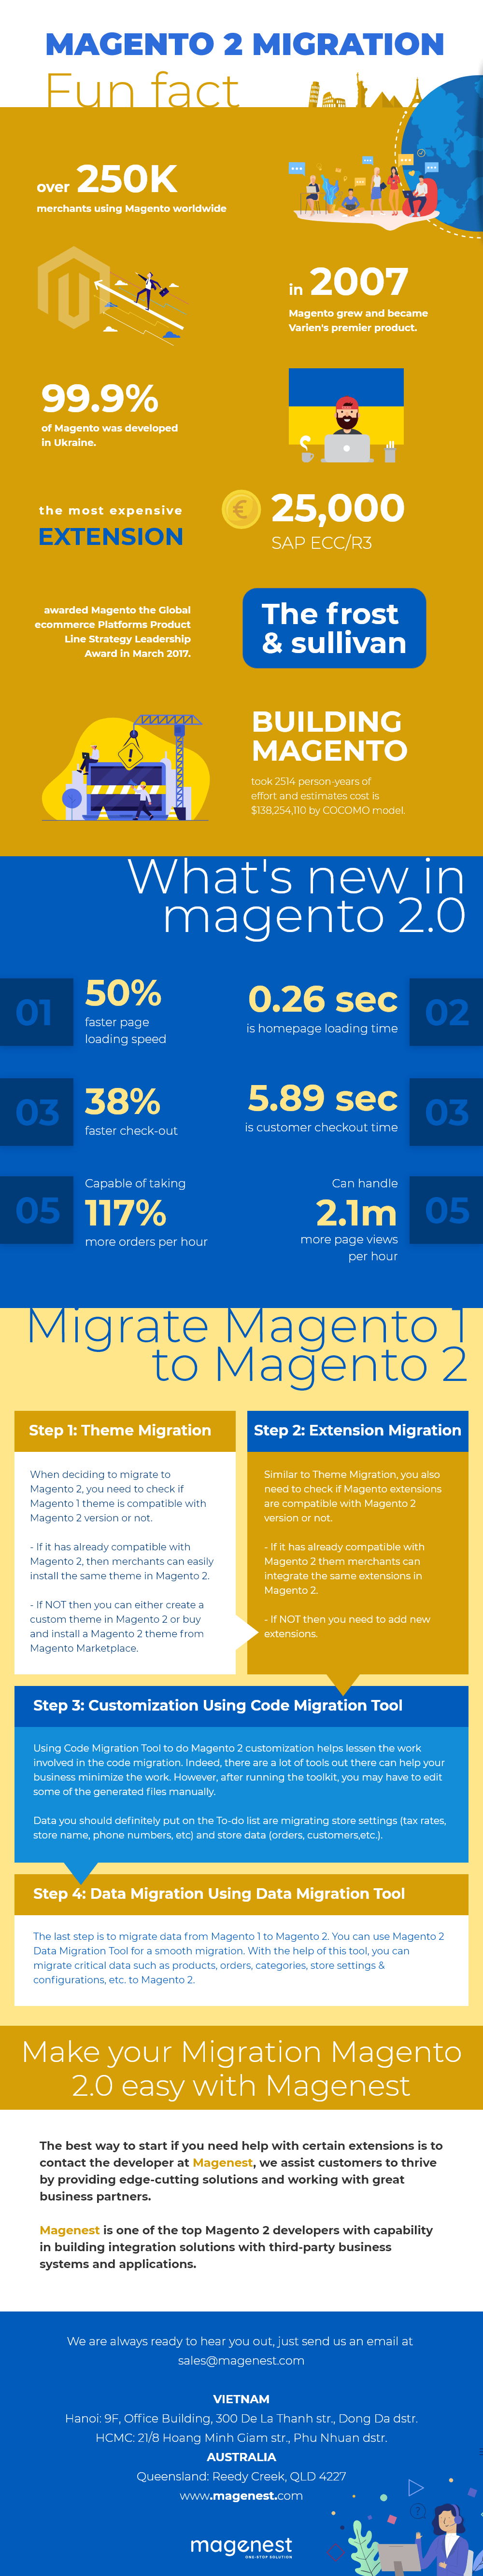 Magento 2 Migration 